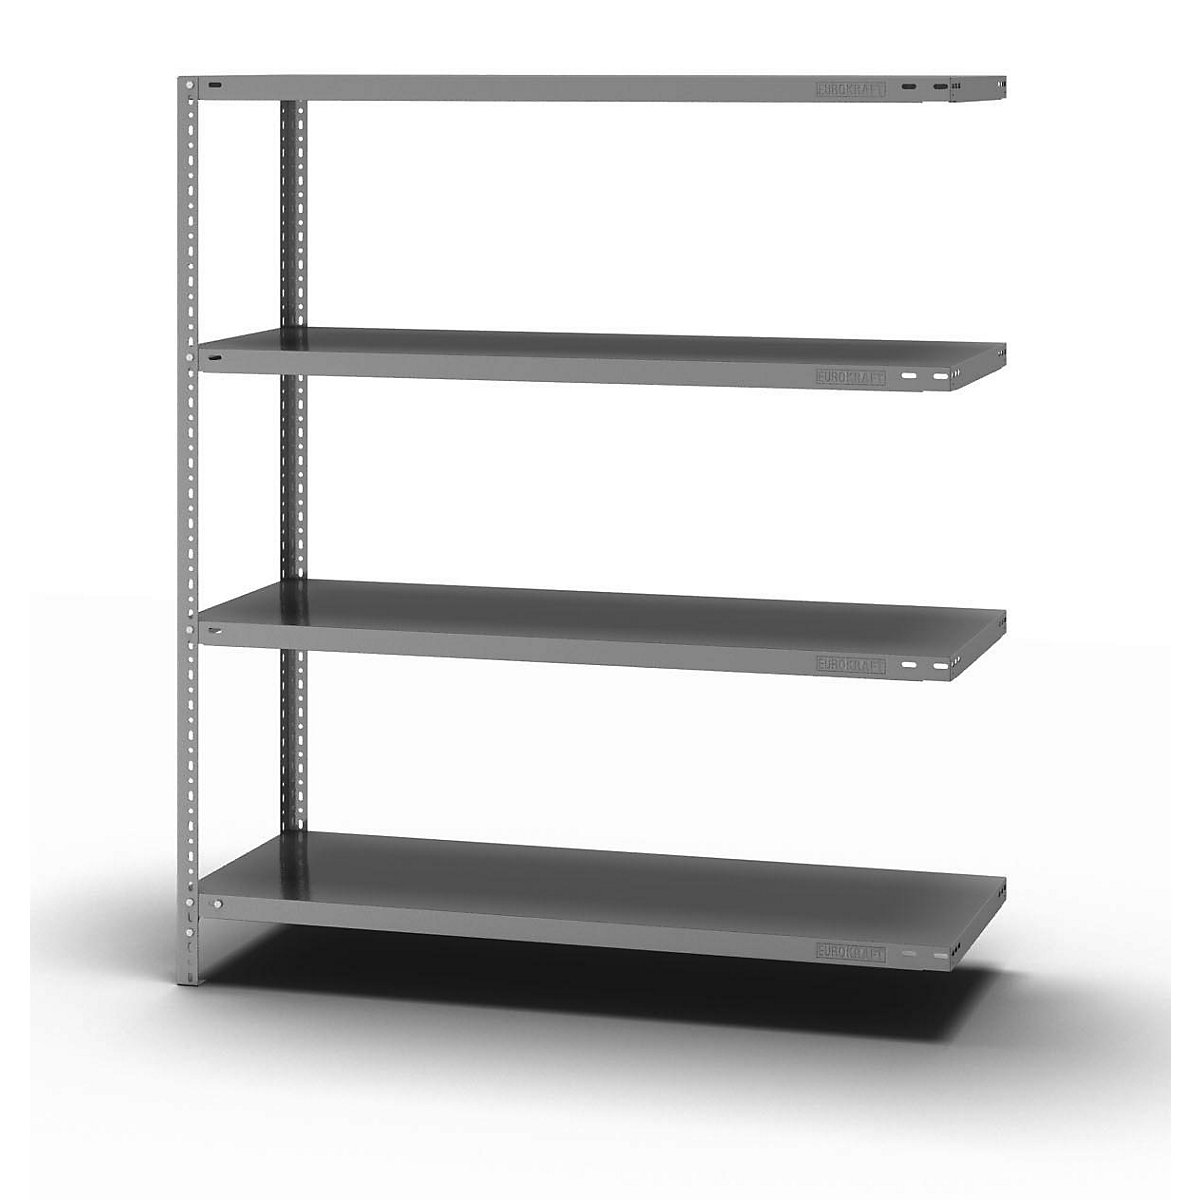 Bolt-together shelf unit, light duty, zinc plated – eurokraft pro, shelf unit height 1500 mm, shelf width 1300 mm, depth 500 mm, extension shelf unit-7